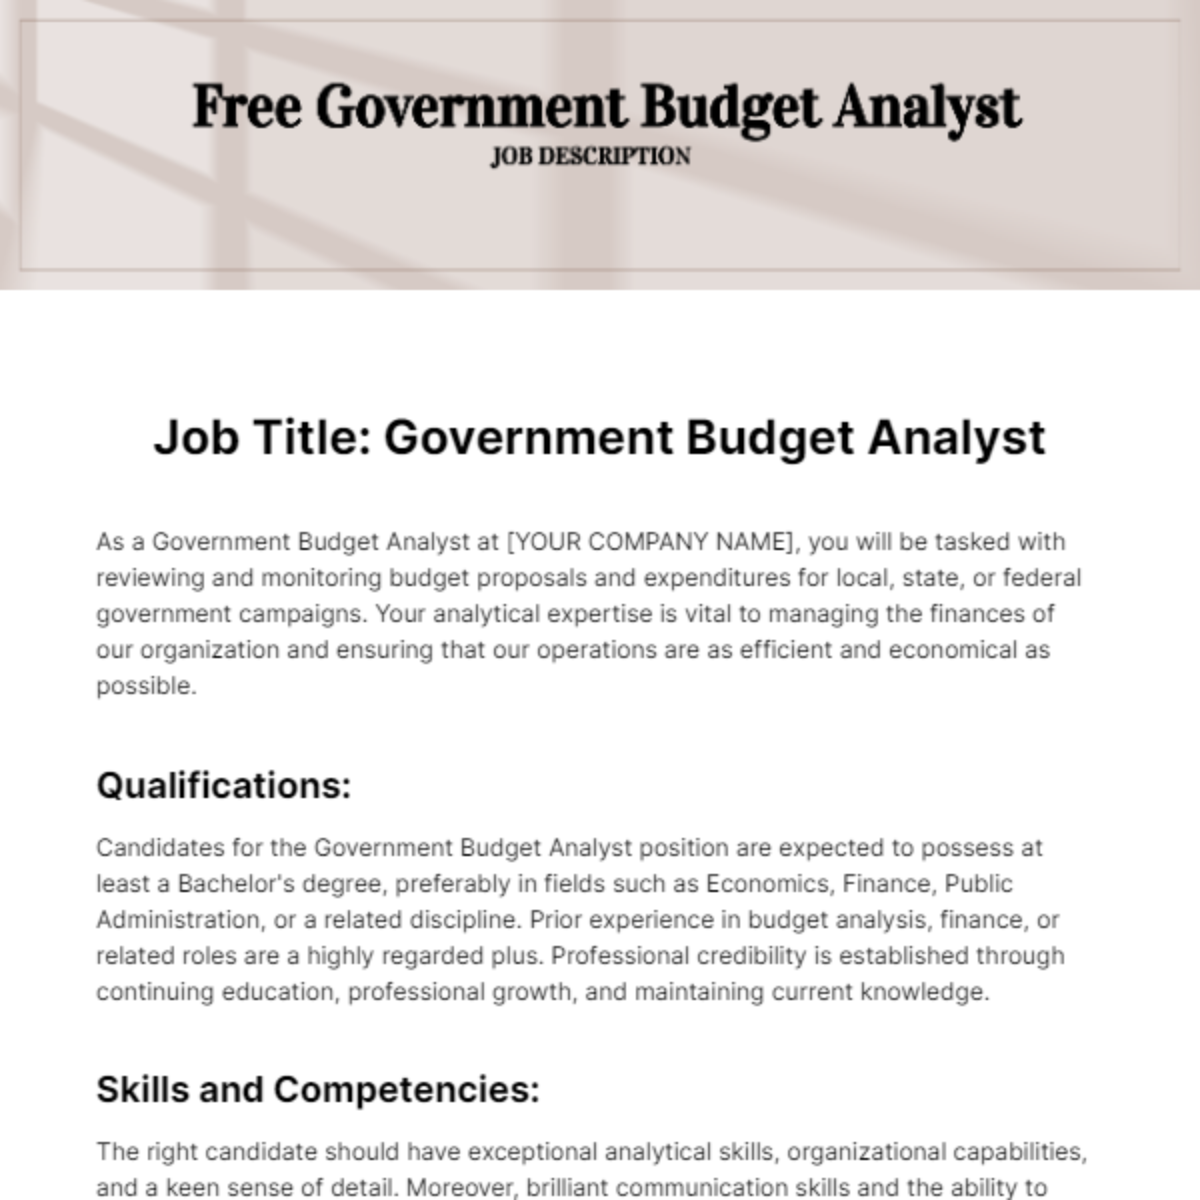 Free Government Budget Analyst Job Description Template